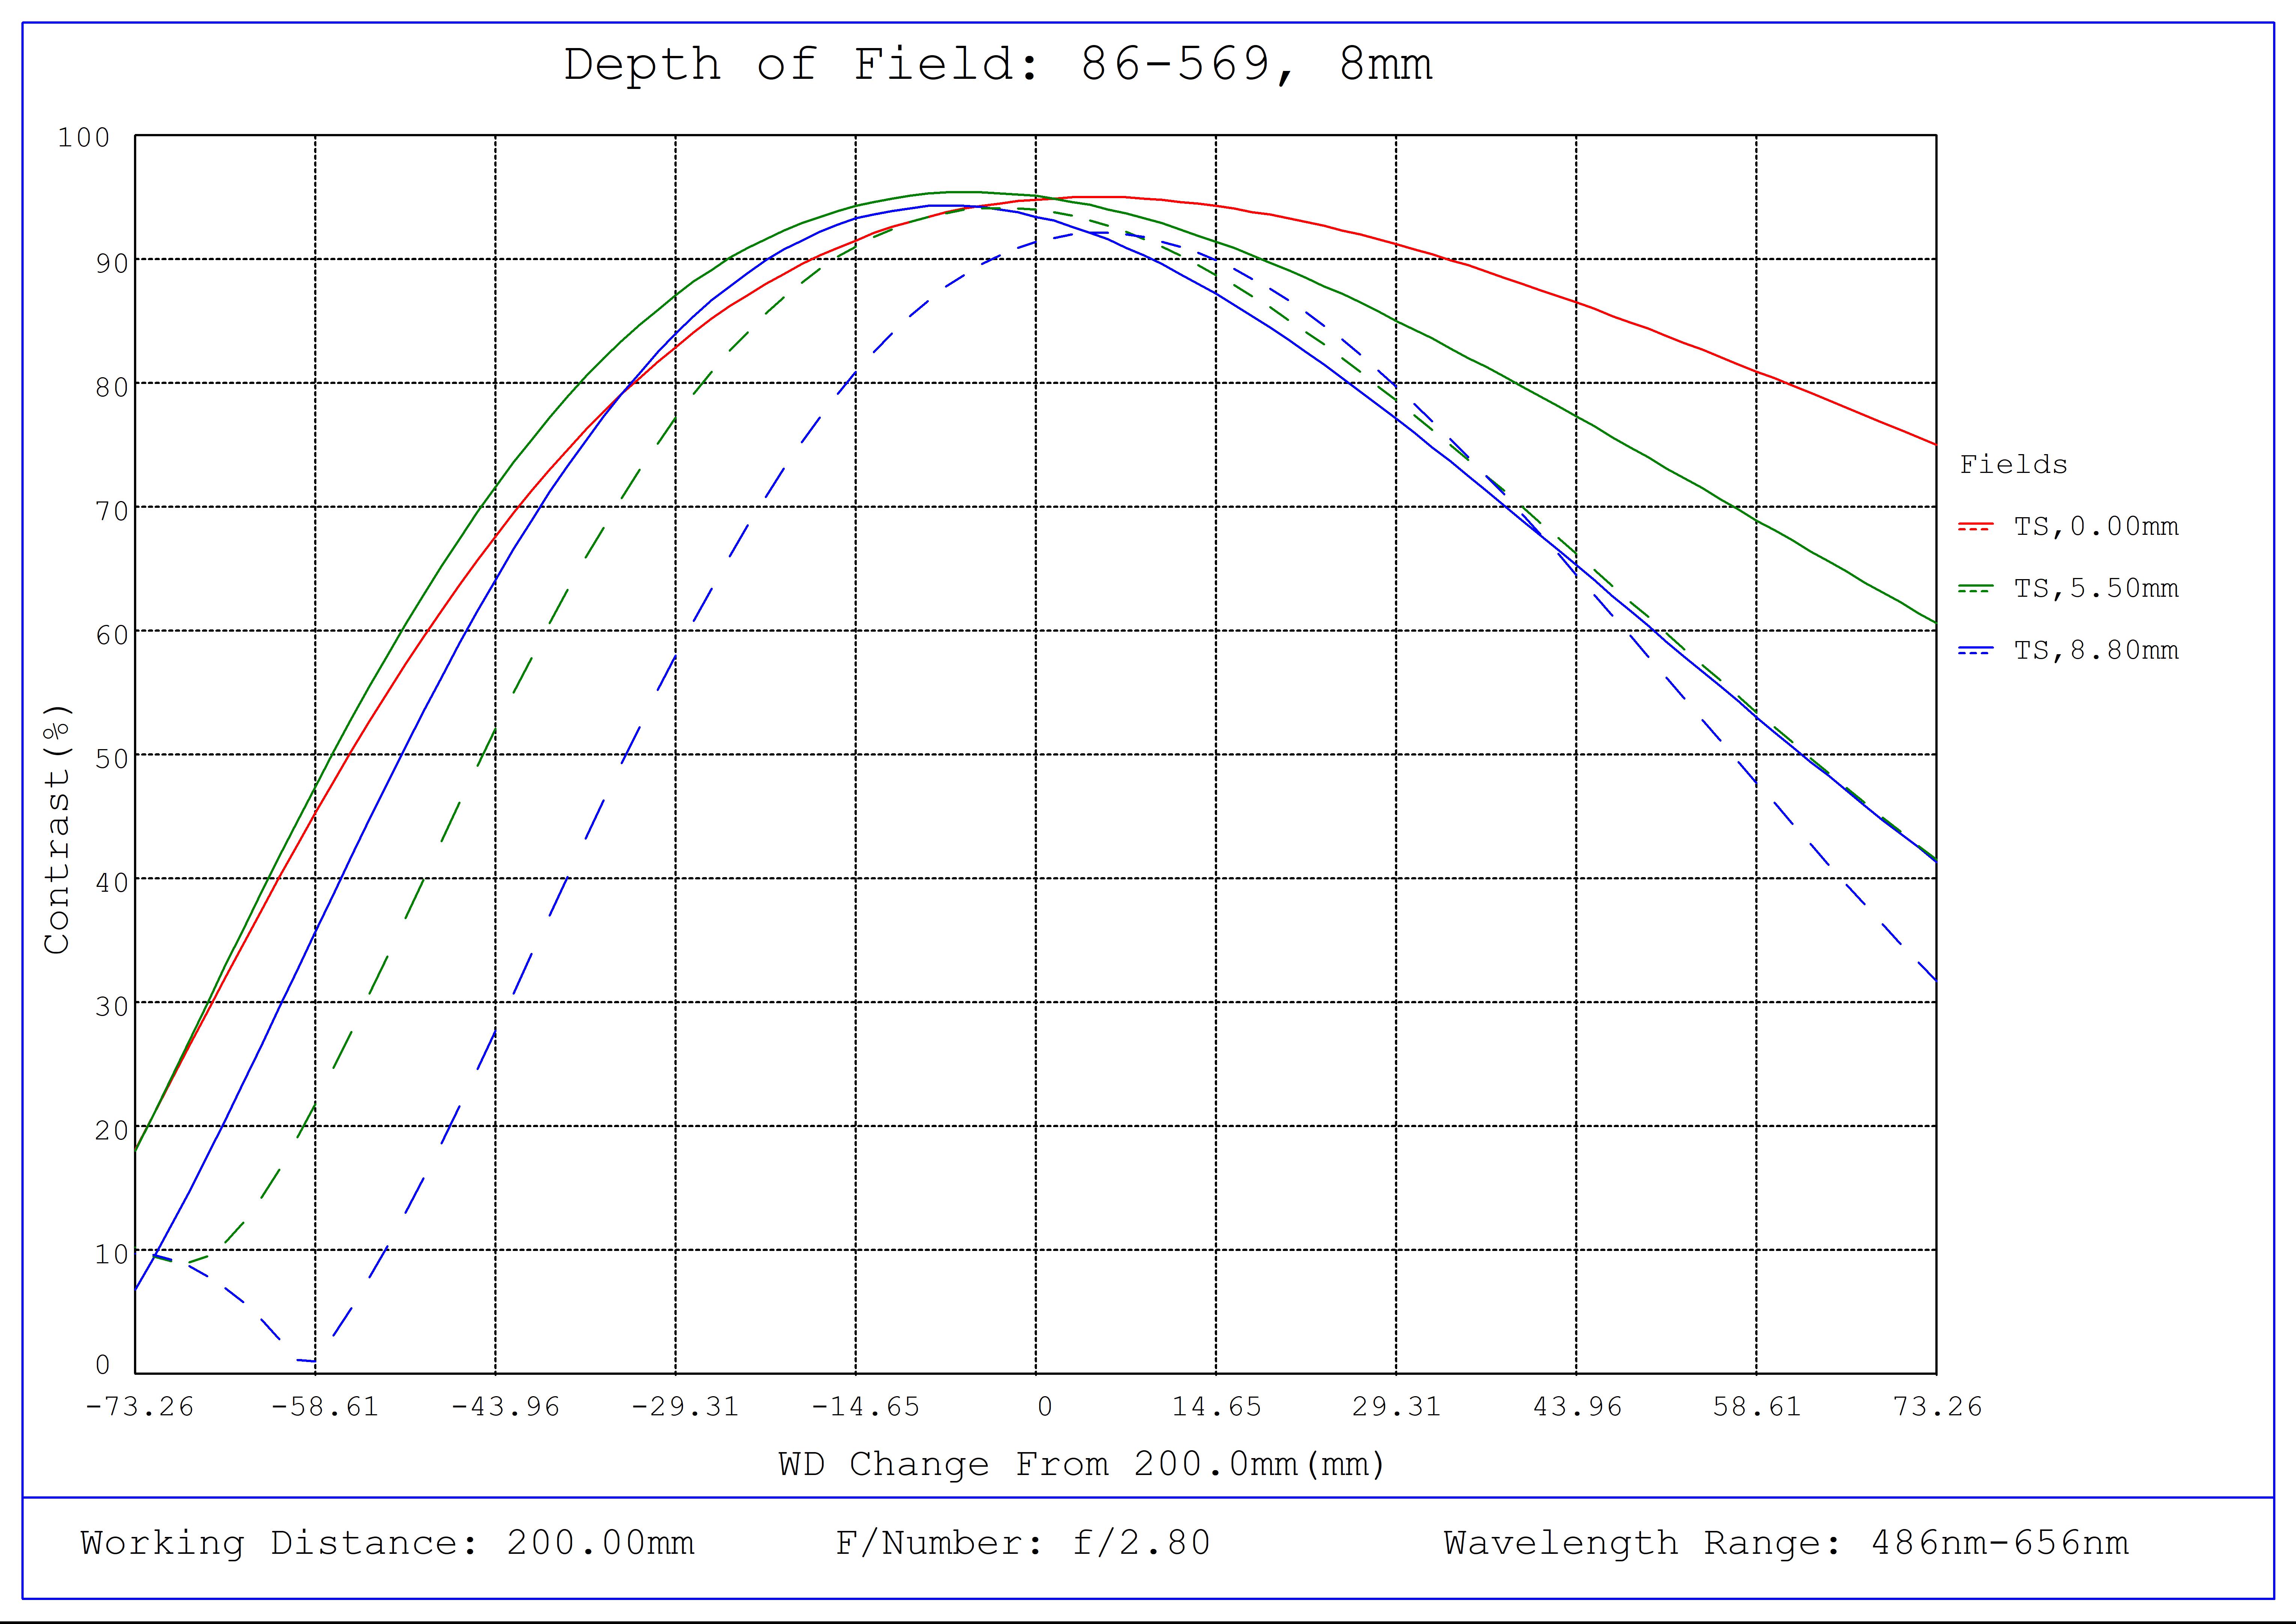 #86-569, 8mm Focal Length, HP Series Fixed Focal Length Lens, Depth of Field Plot, 200mm Working Distance, f2.8